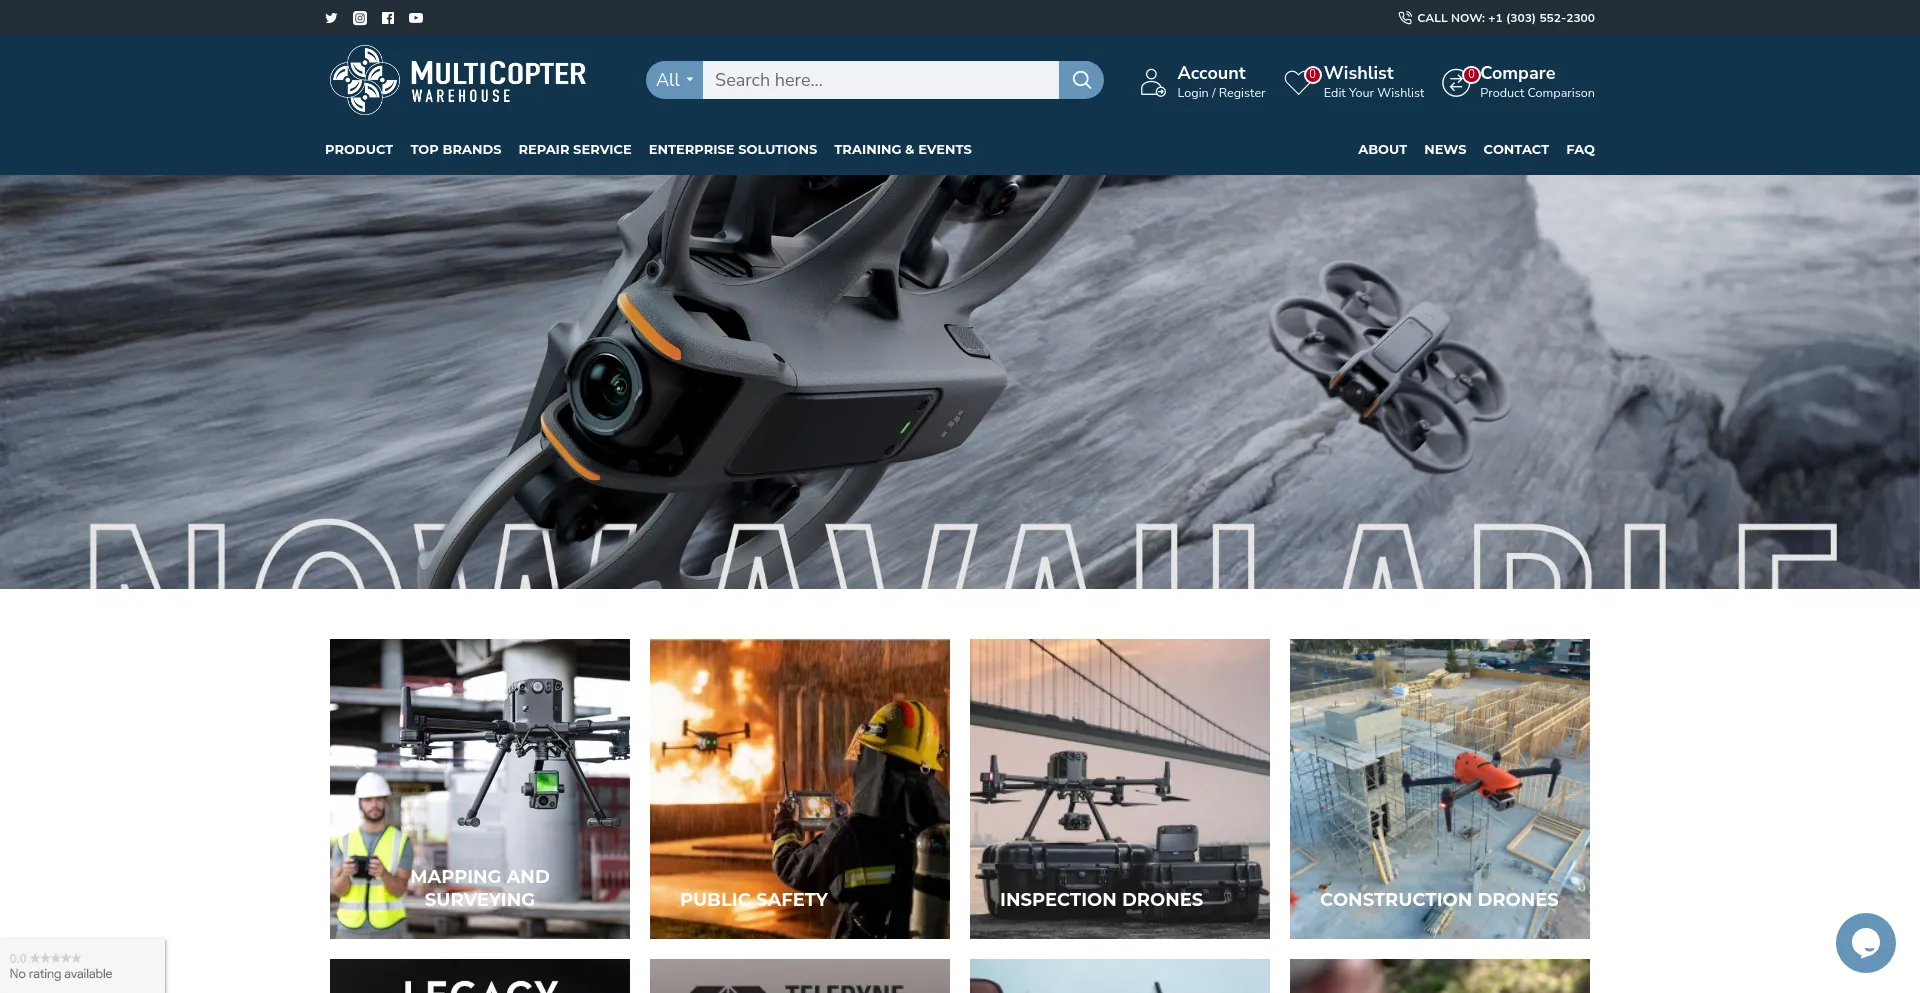 Screenshot of multicopterwarehouse.com homepage